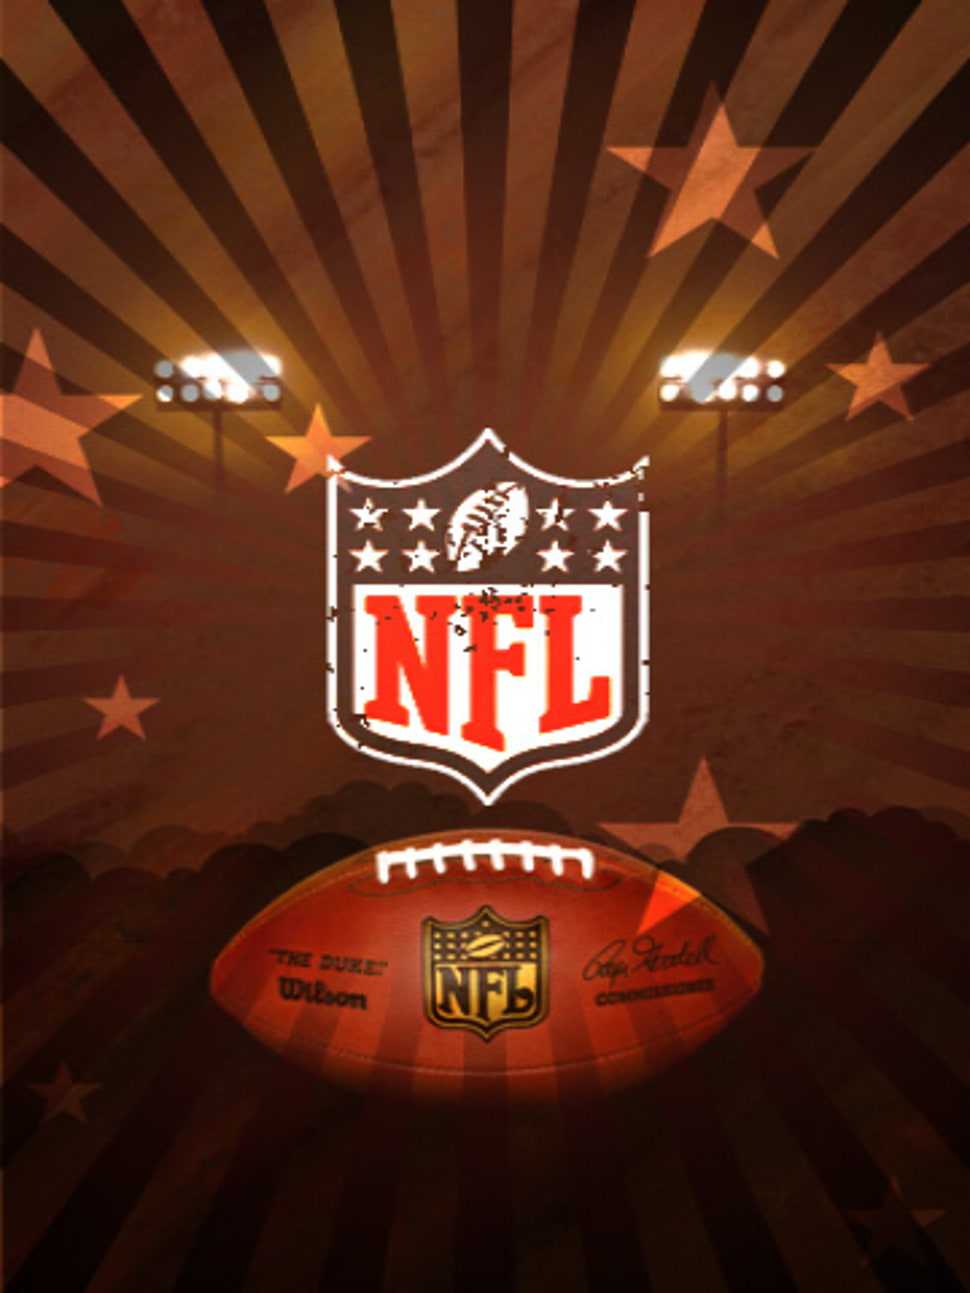 NFL logo HD wallpaper